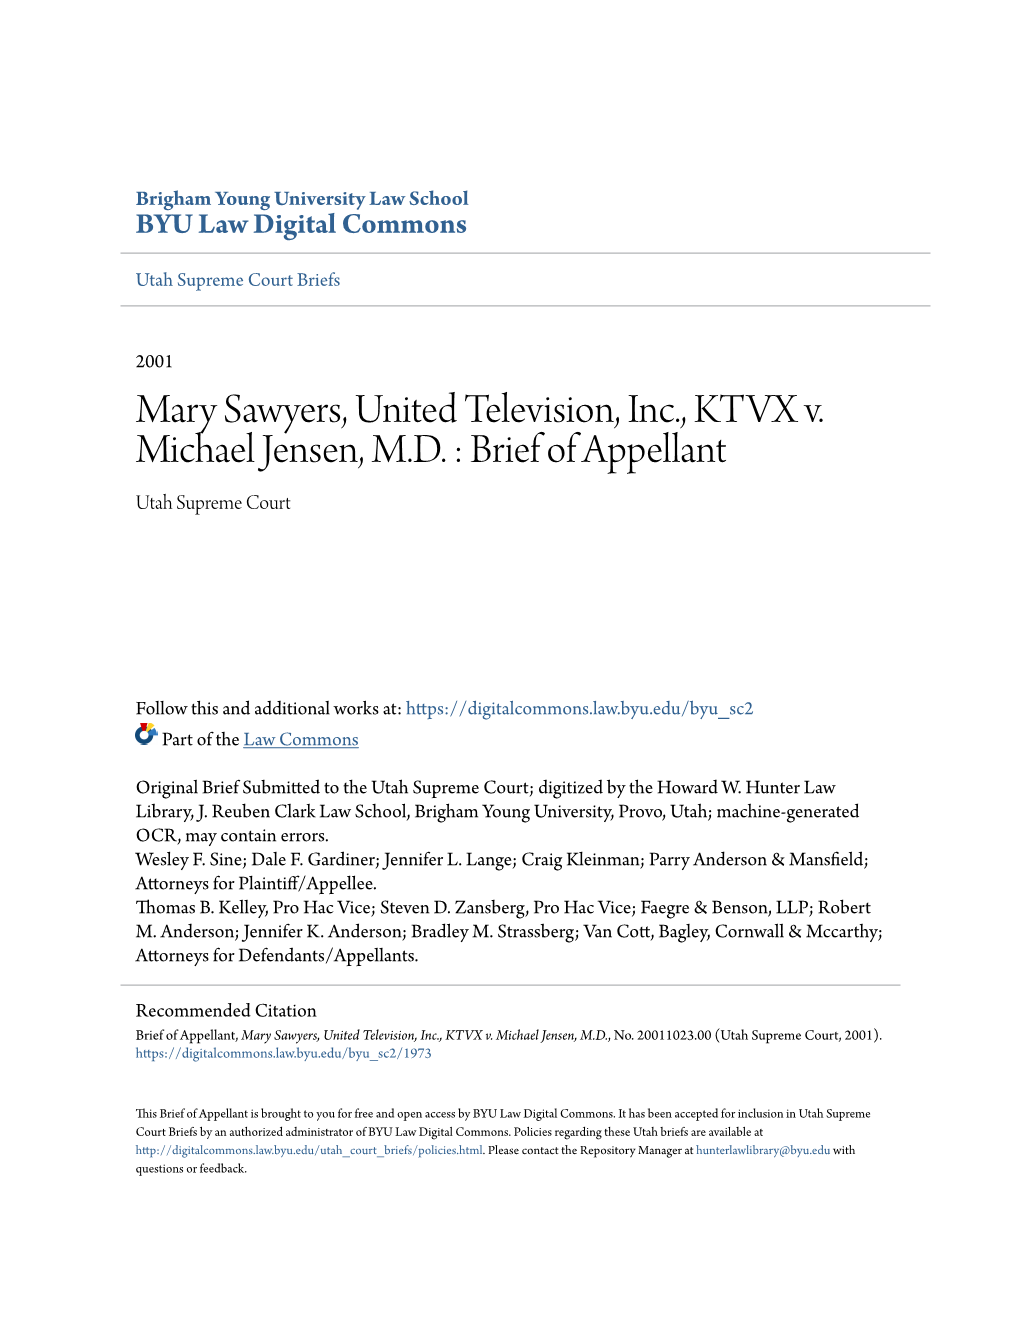 Mary Sawyers, United Television, Inc., KTVX V